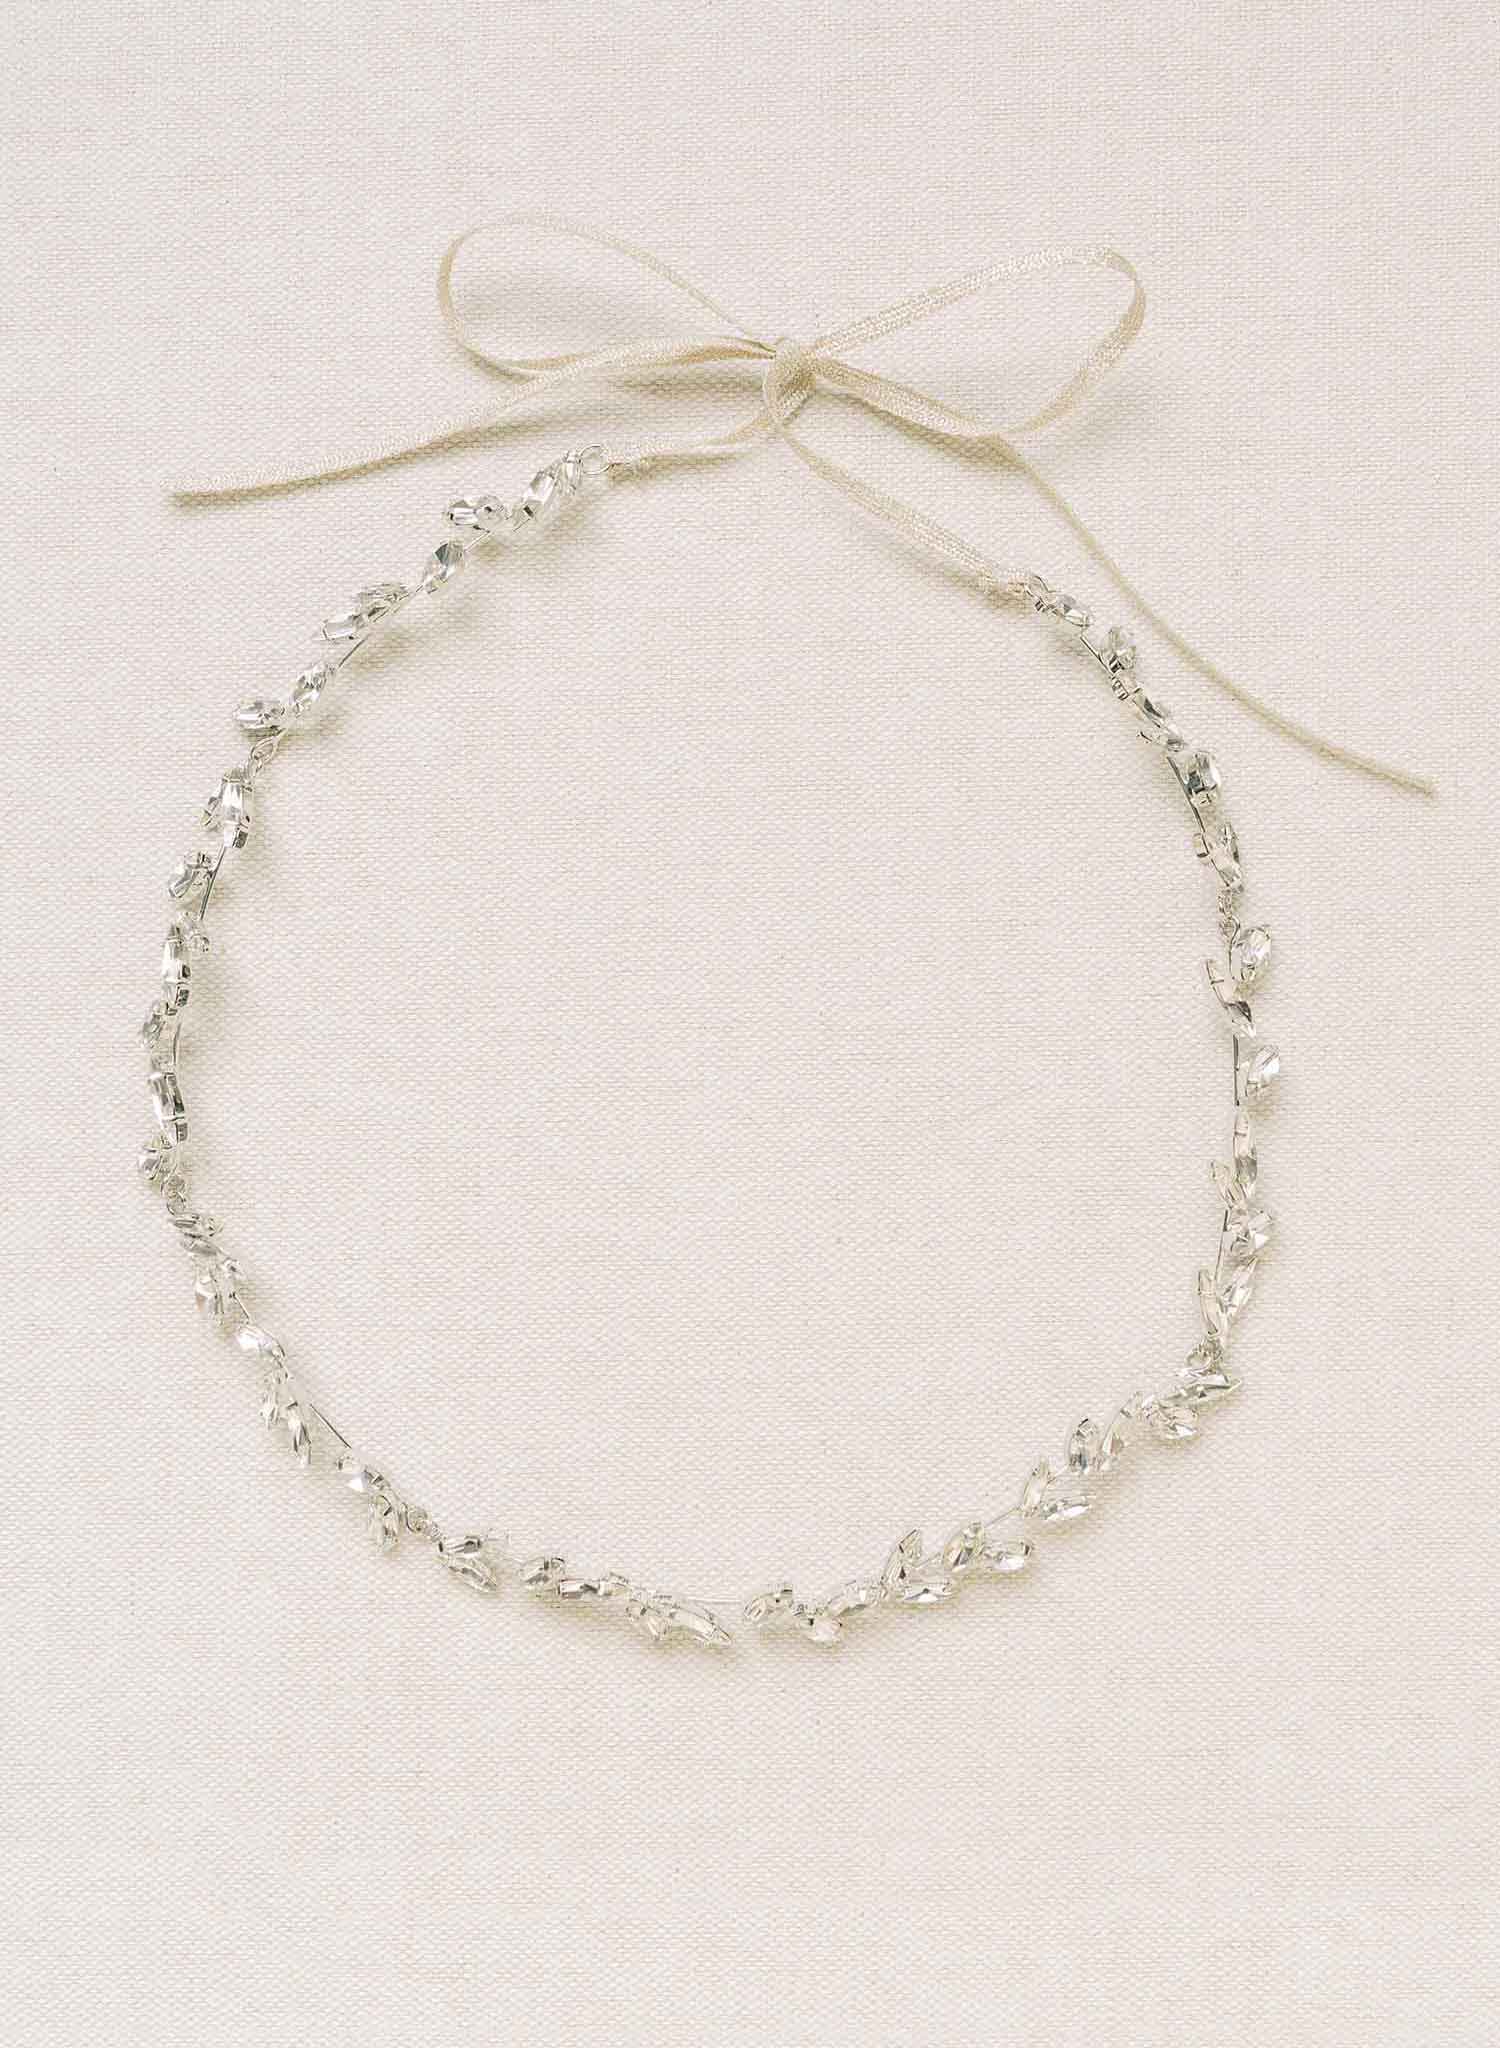 Modern bridal crystal circlet - Style #2144